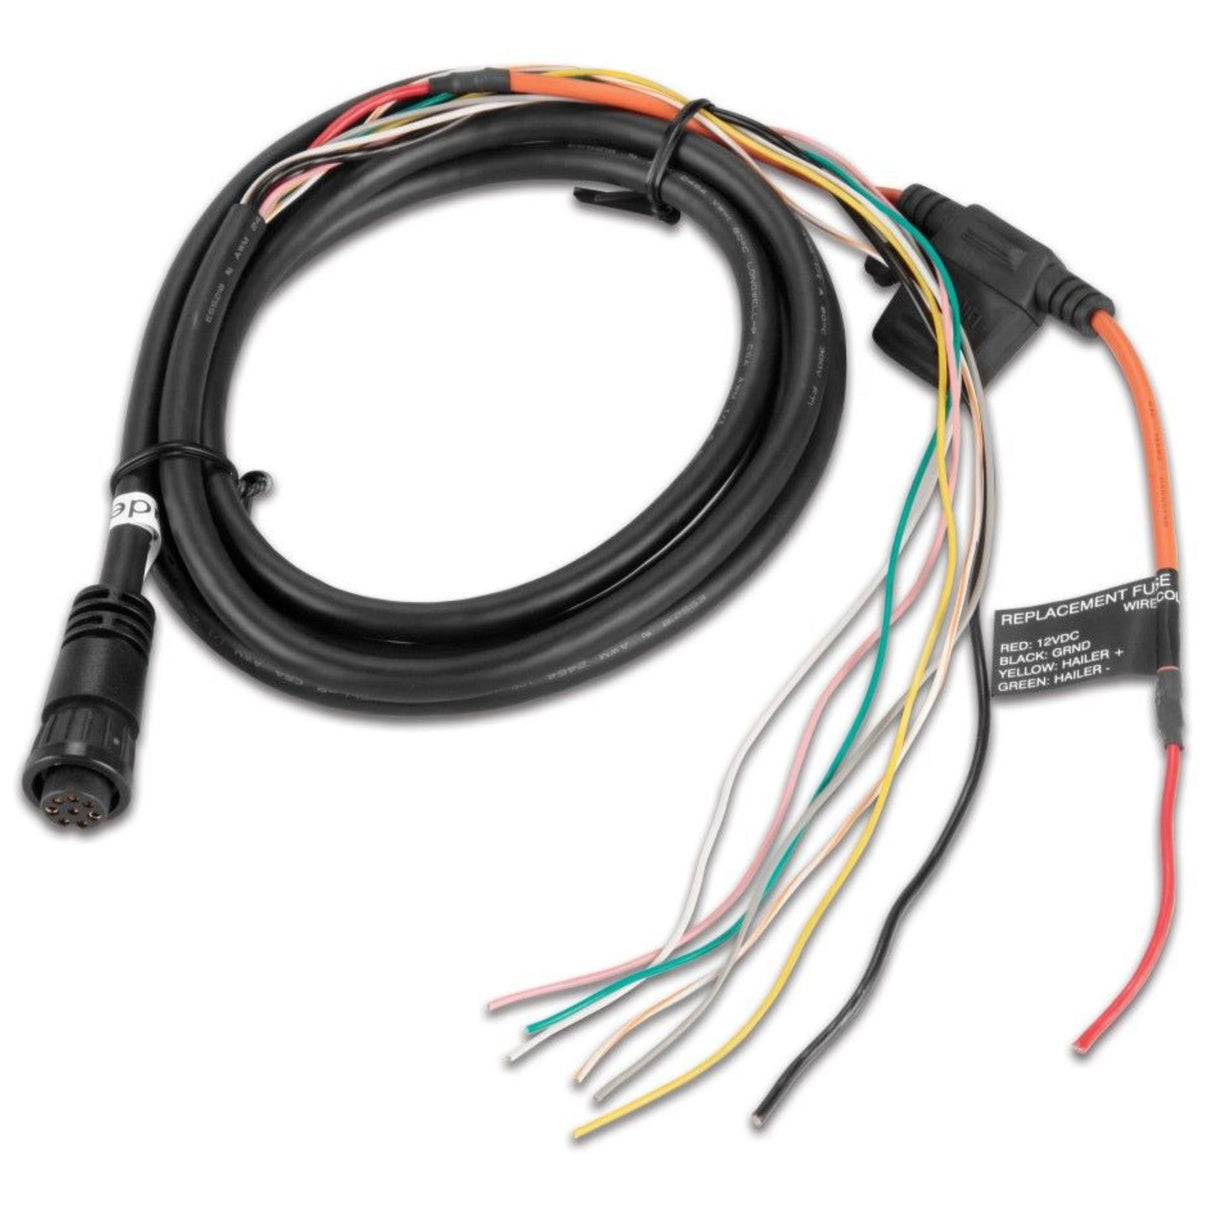 Garmin NMEA 0183 Power Cable